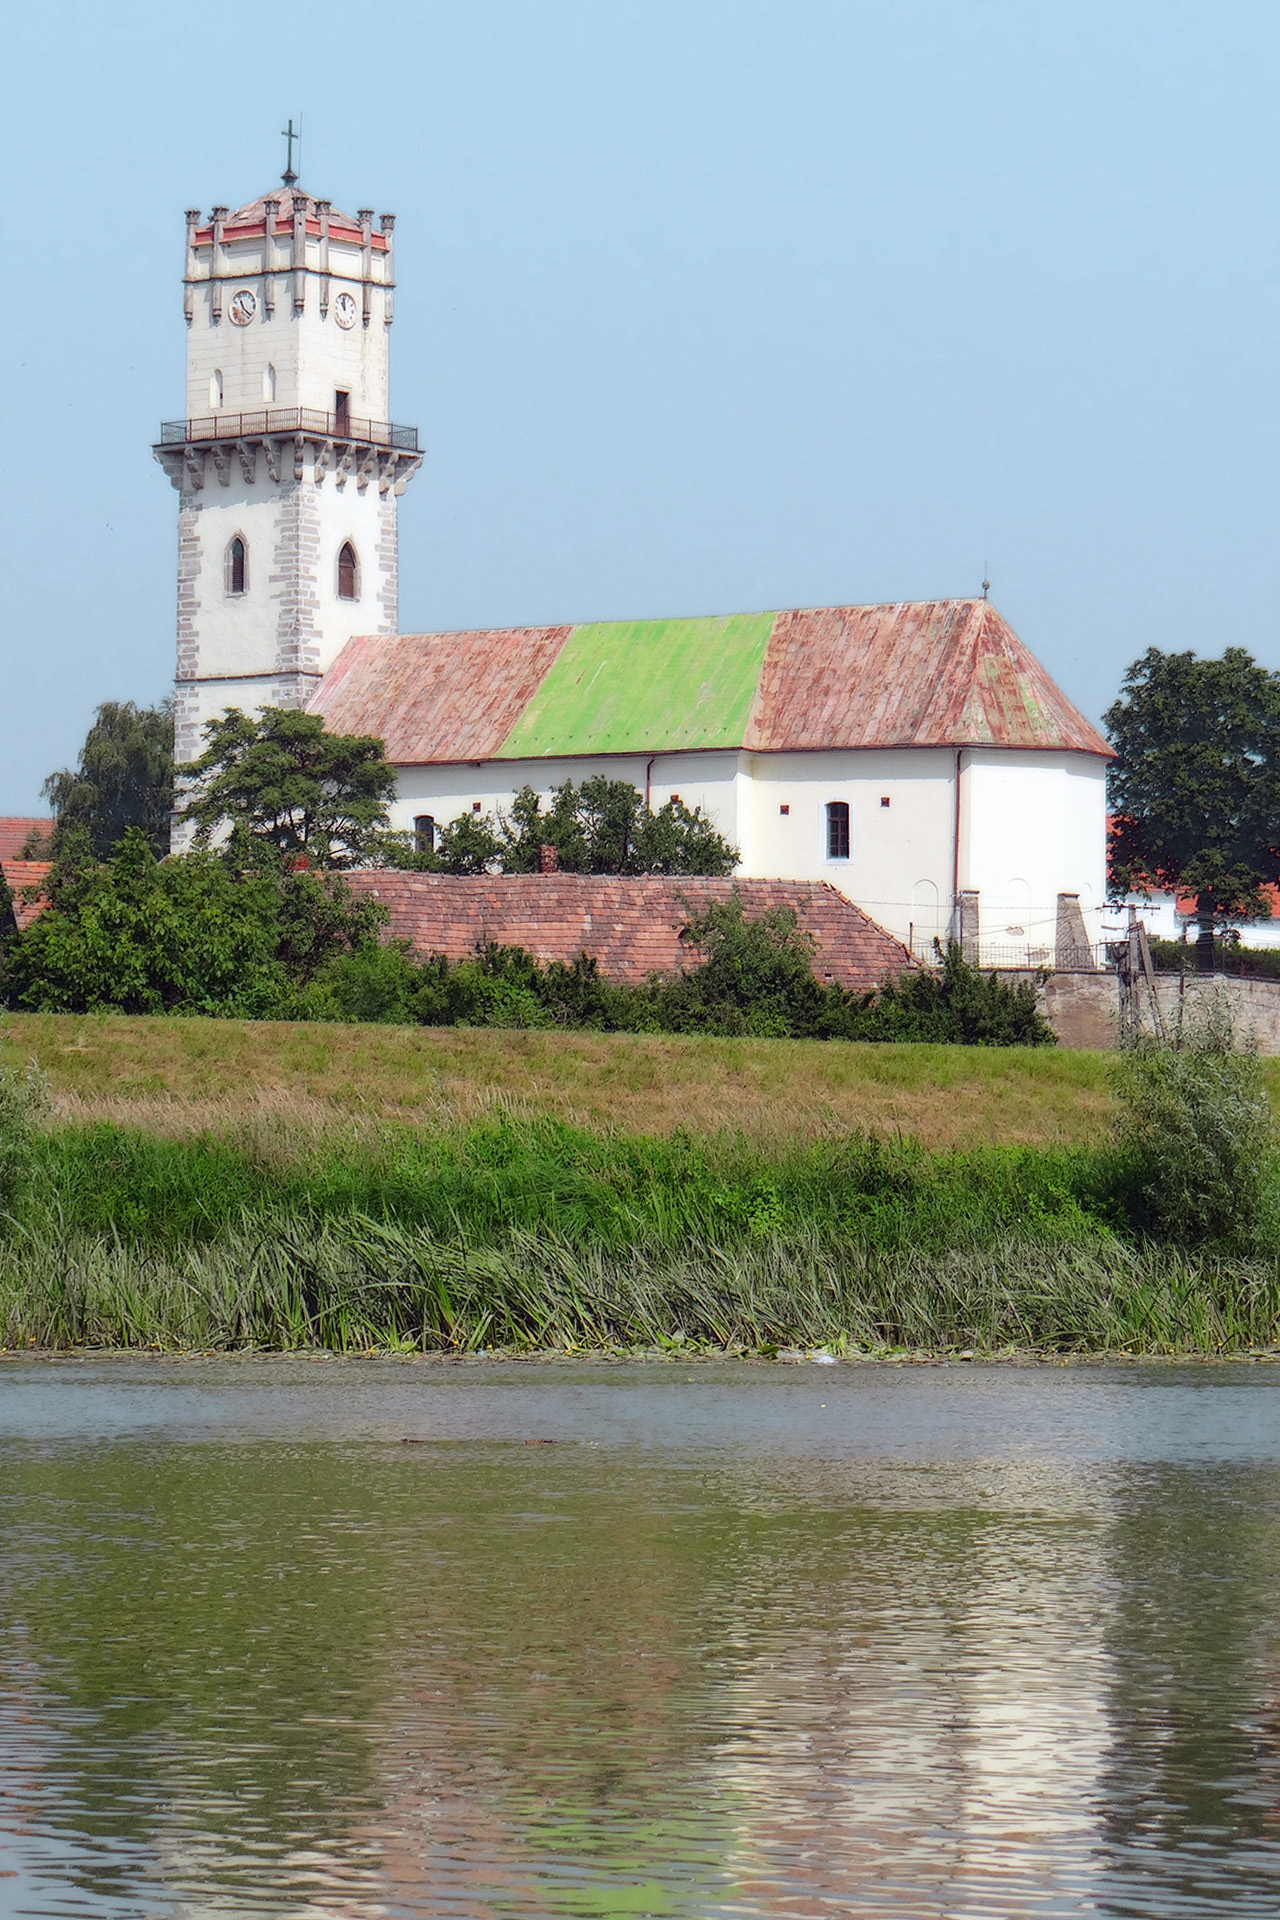 The Catholic church in the village of Olaszliszka